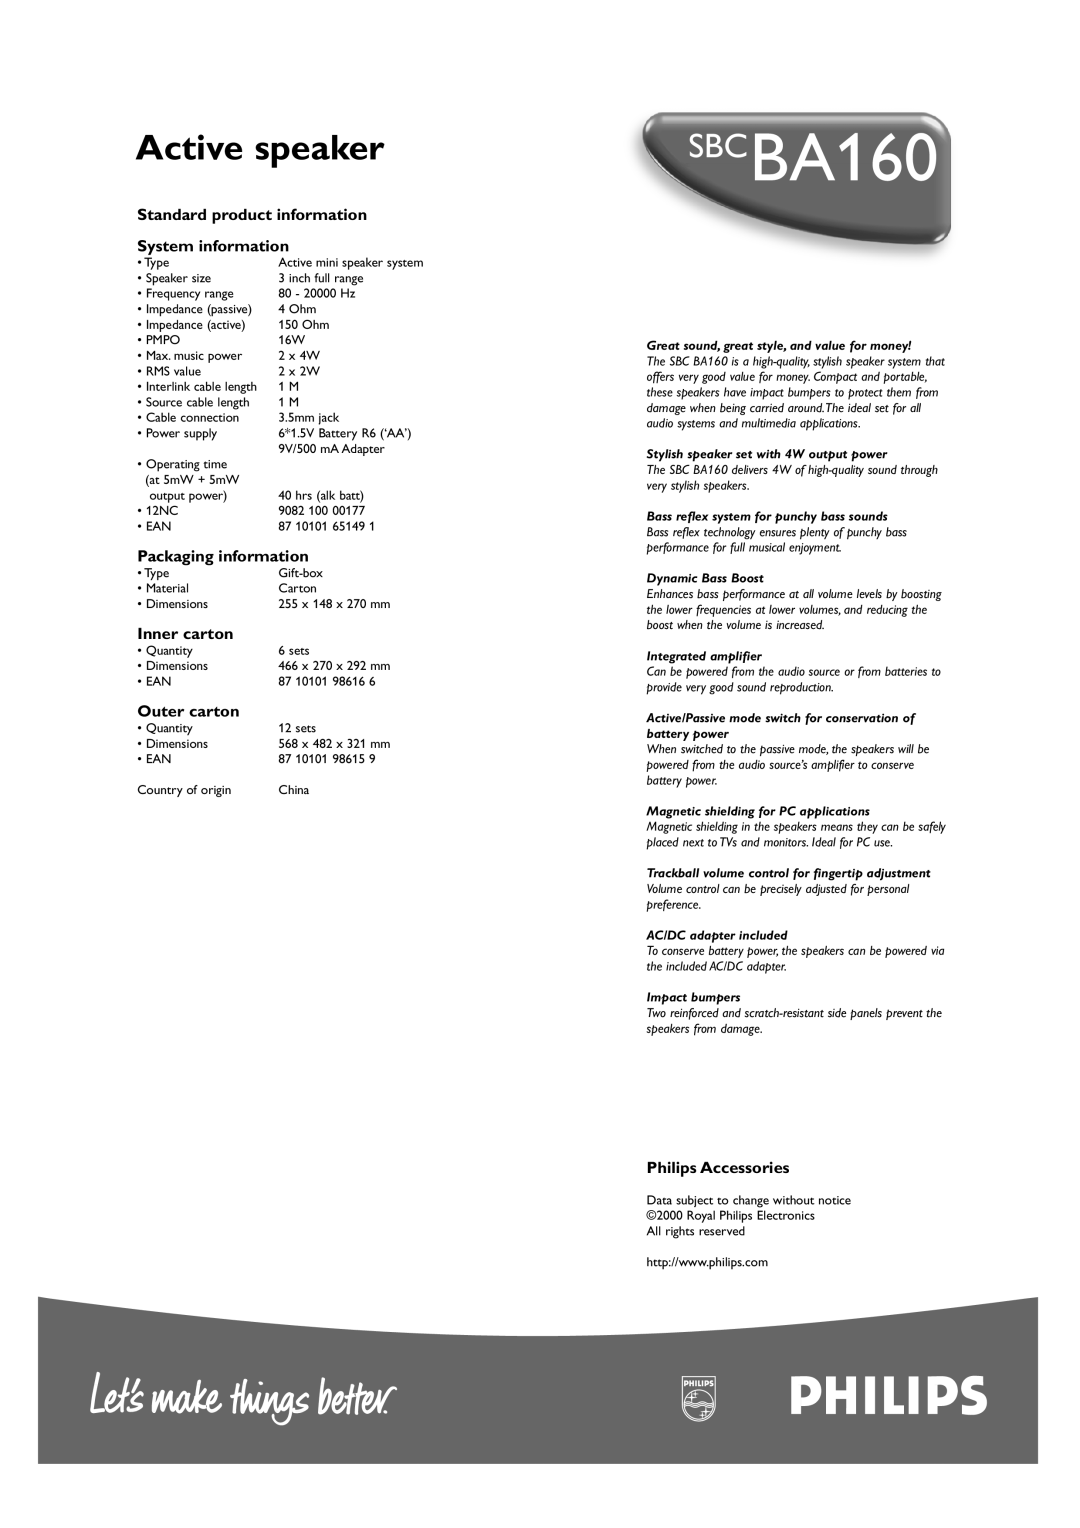 Philips SBCBA160 Active speaker, Standard product information System information, Packaging information, Inner carton 